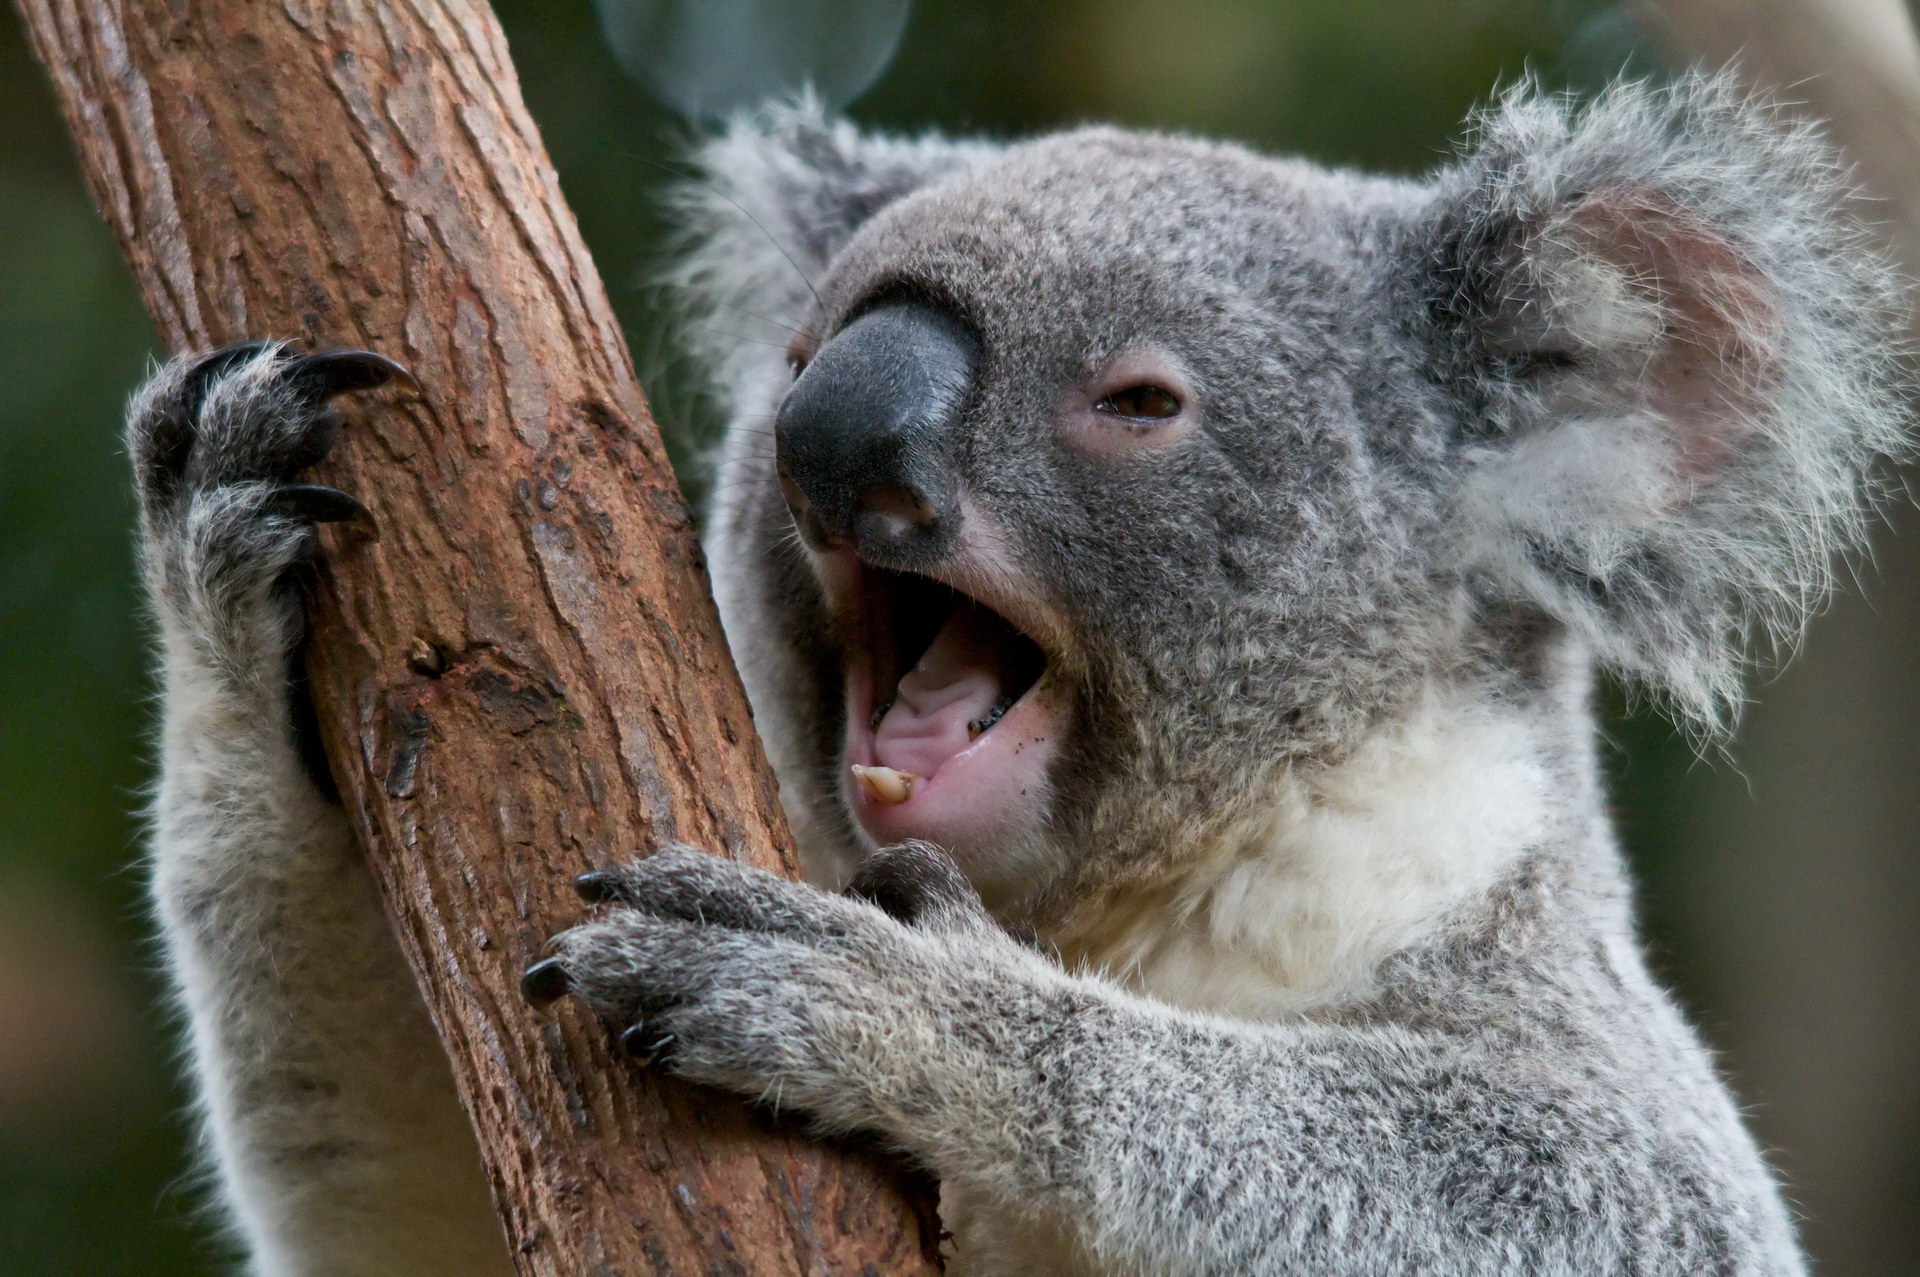 Koala is yawning